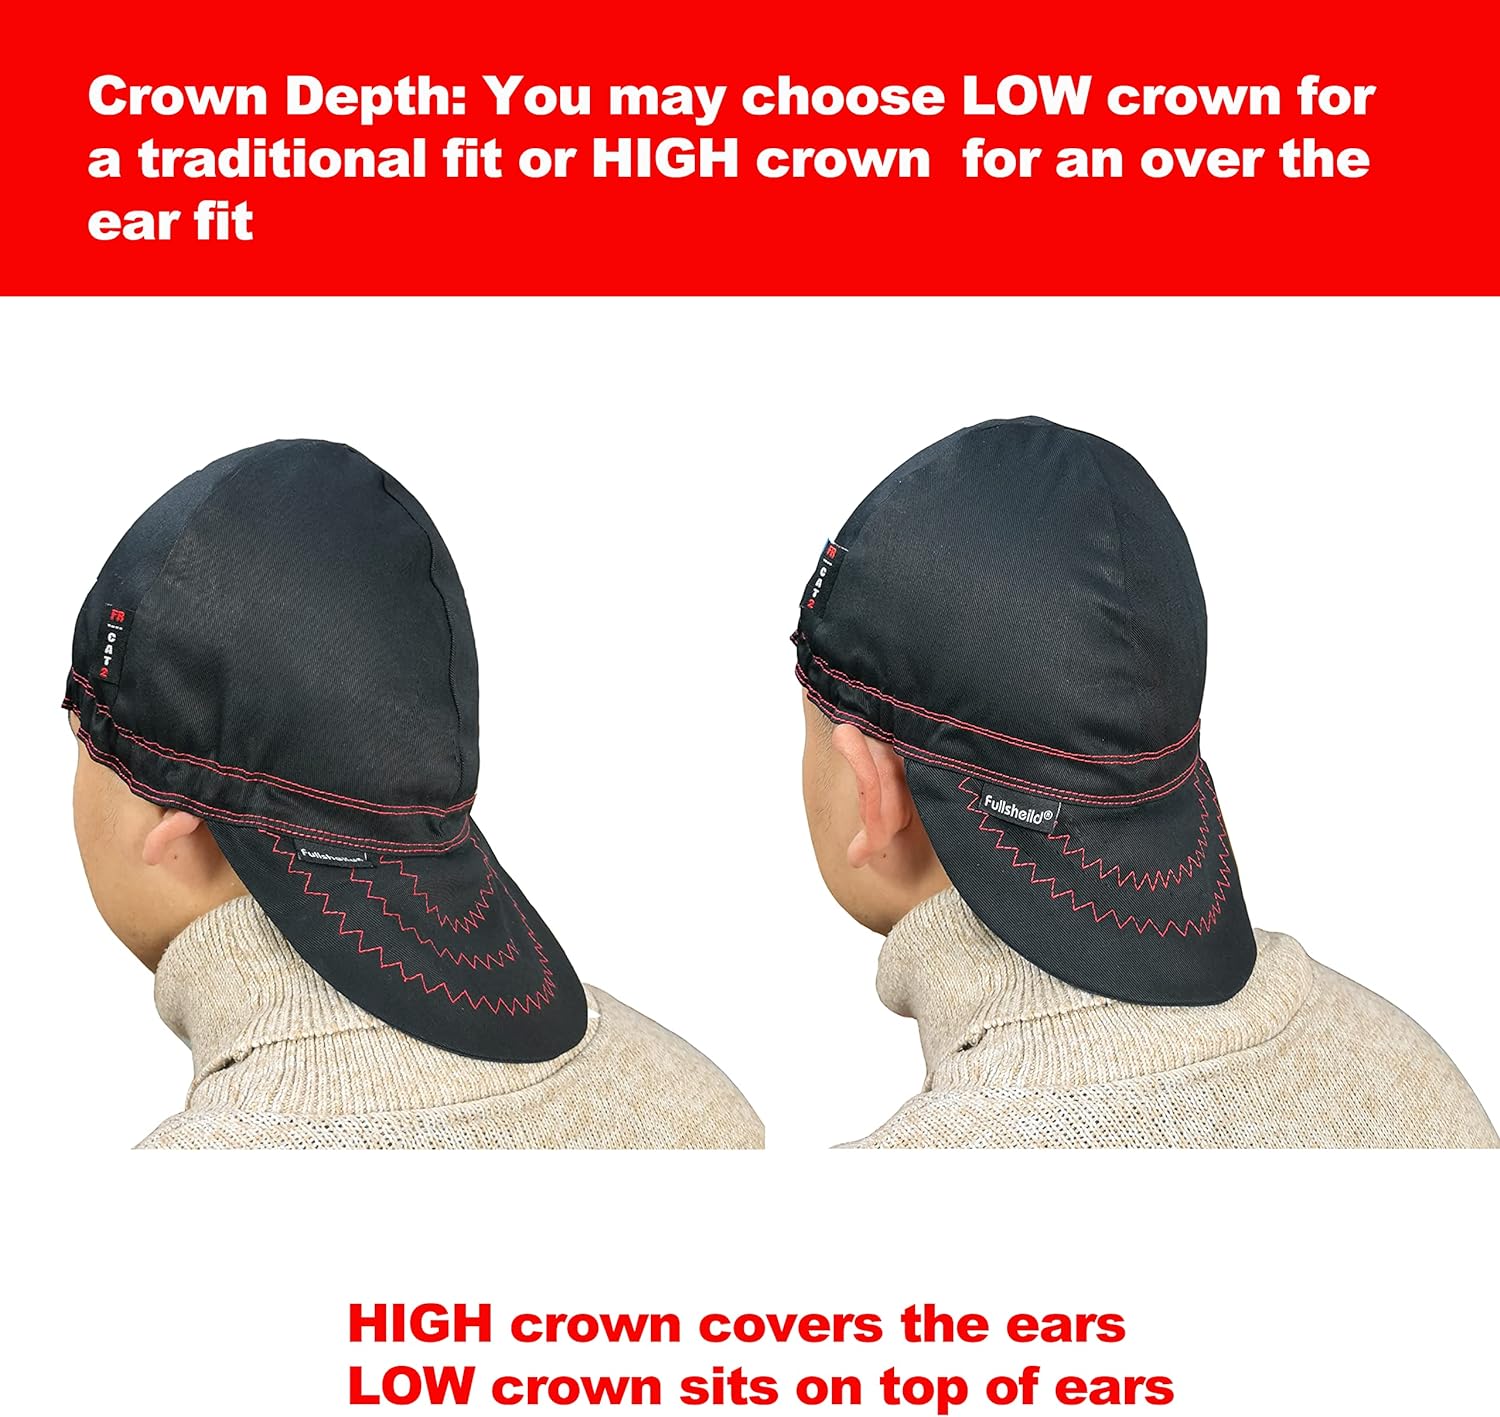 Fullsheild FR Welding Cap HRC2 Flame Resistant 2-ply Cotton Reversible Welder Hat Hood USA Standard Short Crown Black